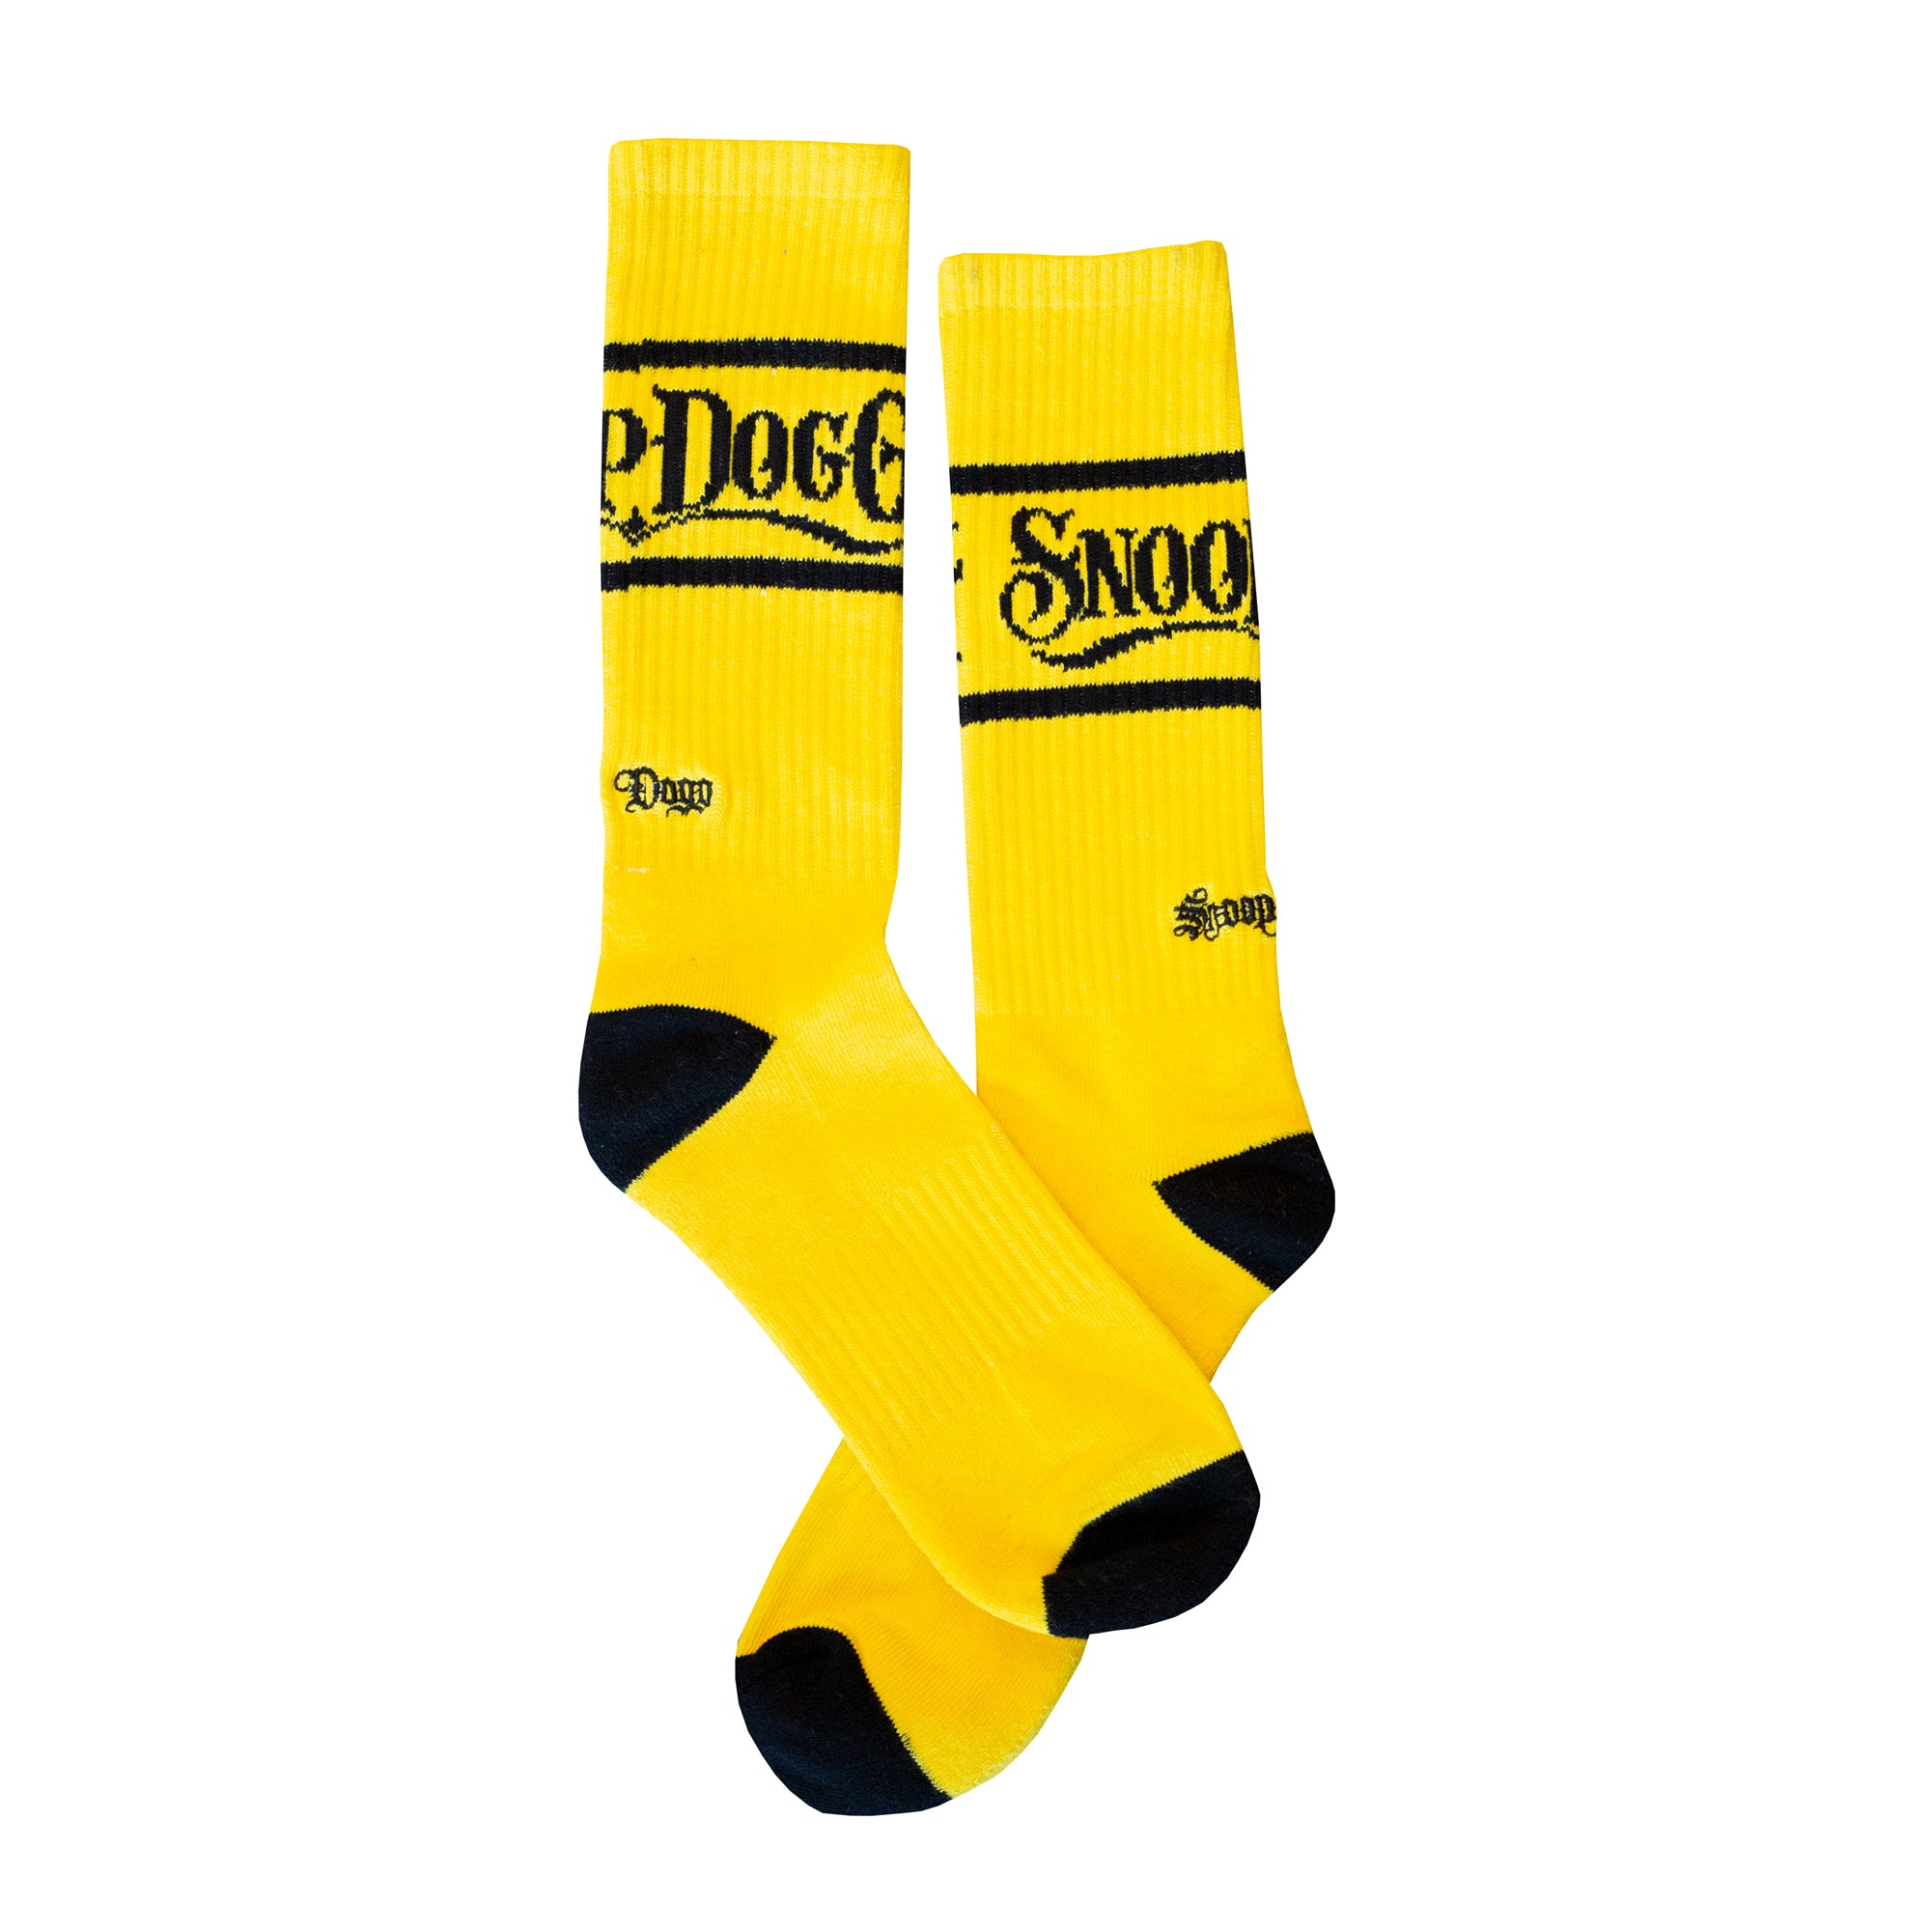 Snoop Dogg Socks